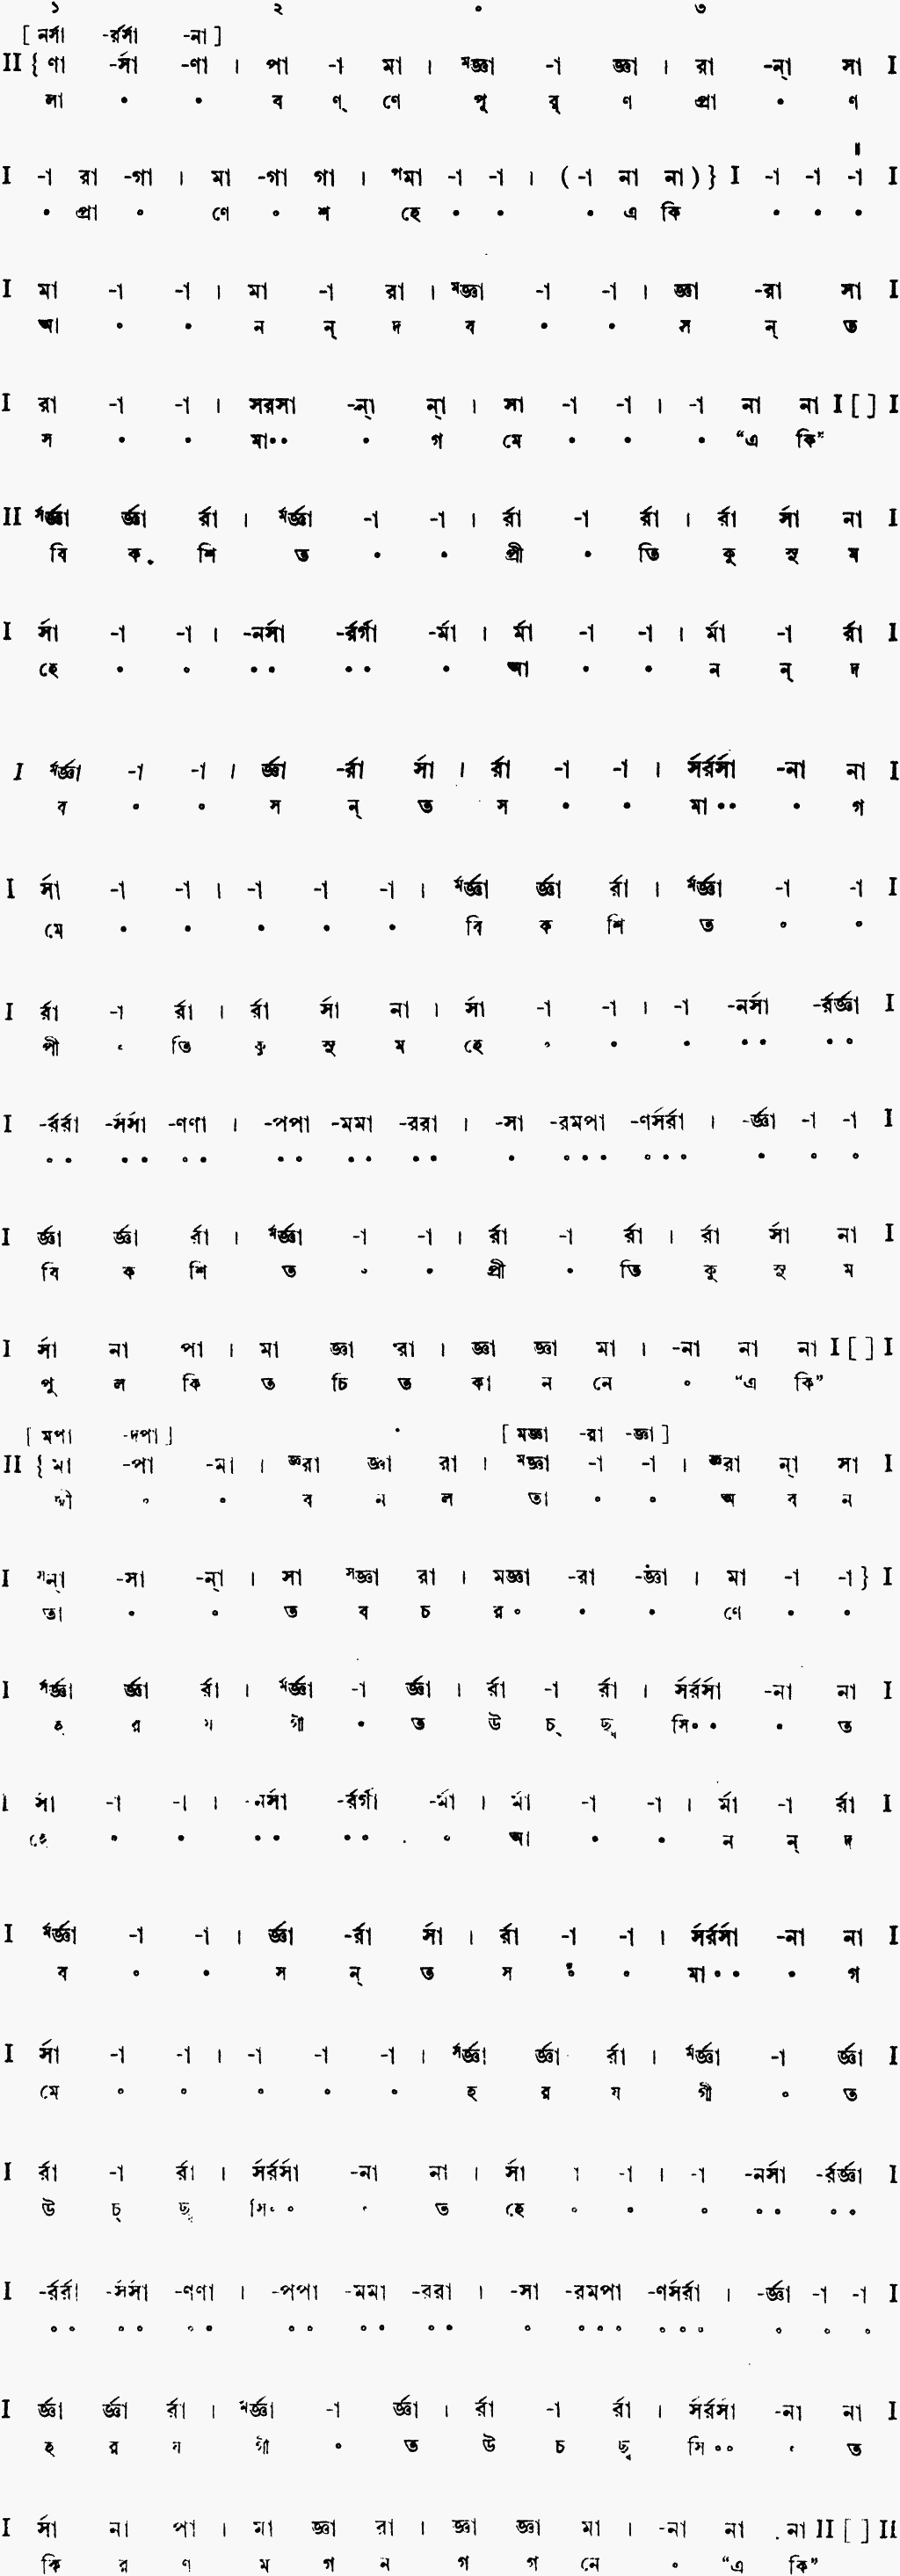 Notation eki labonye purno